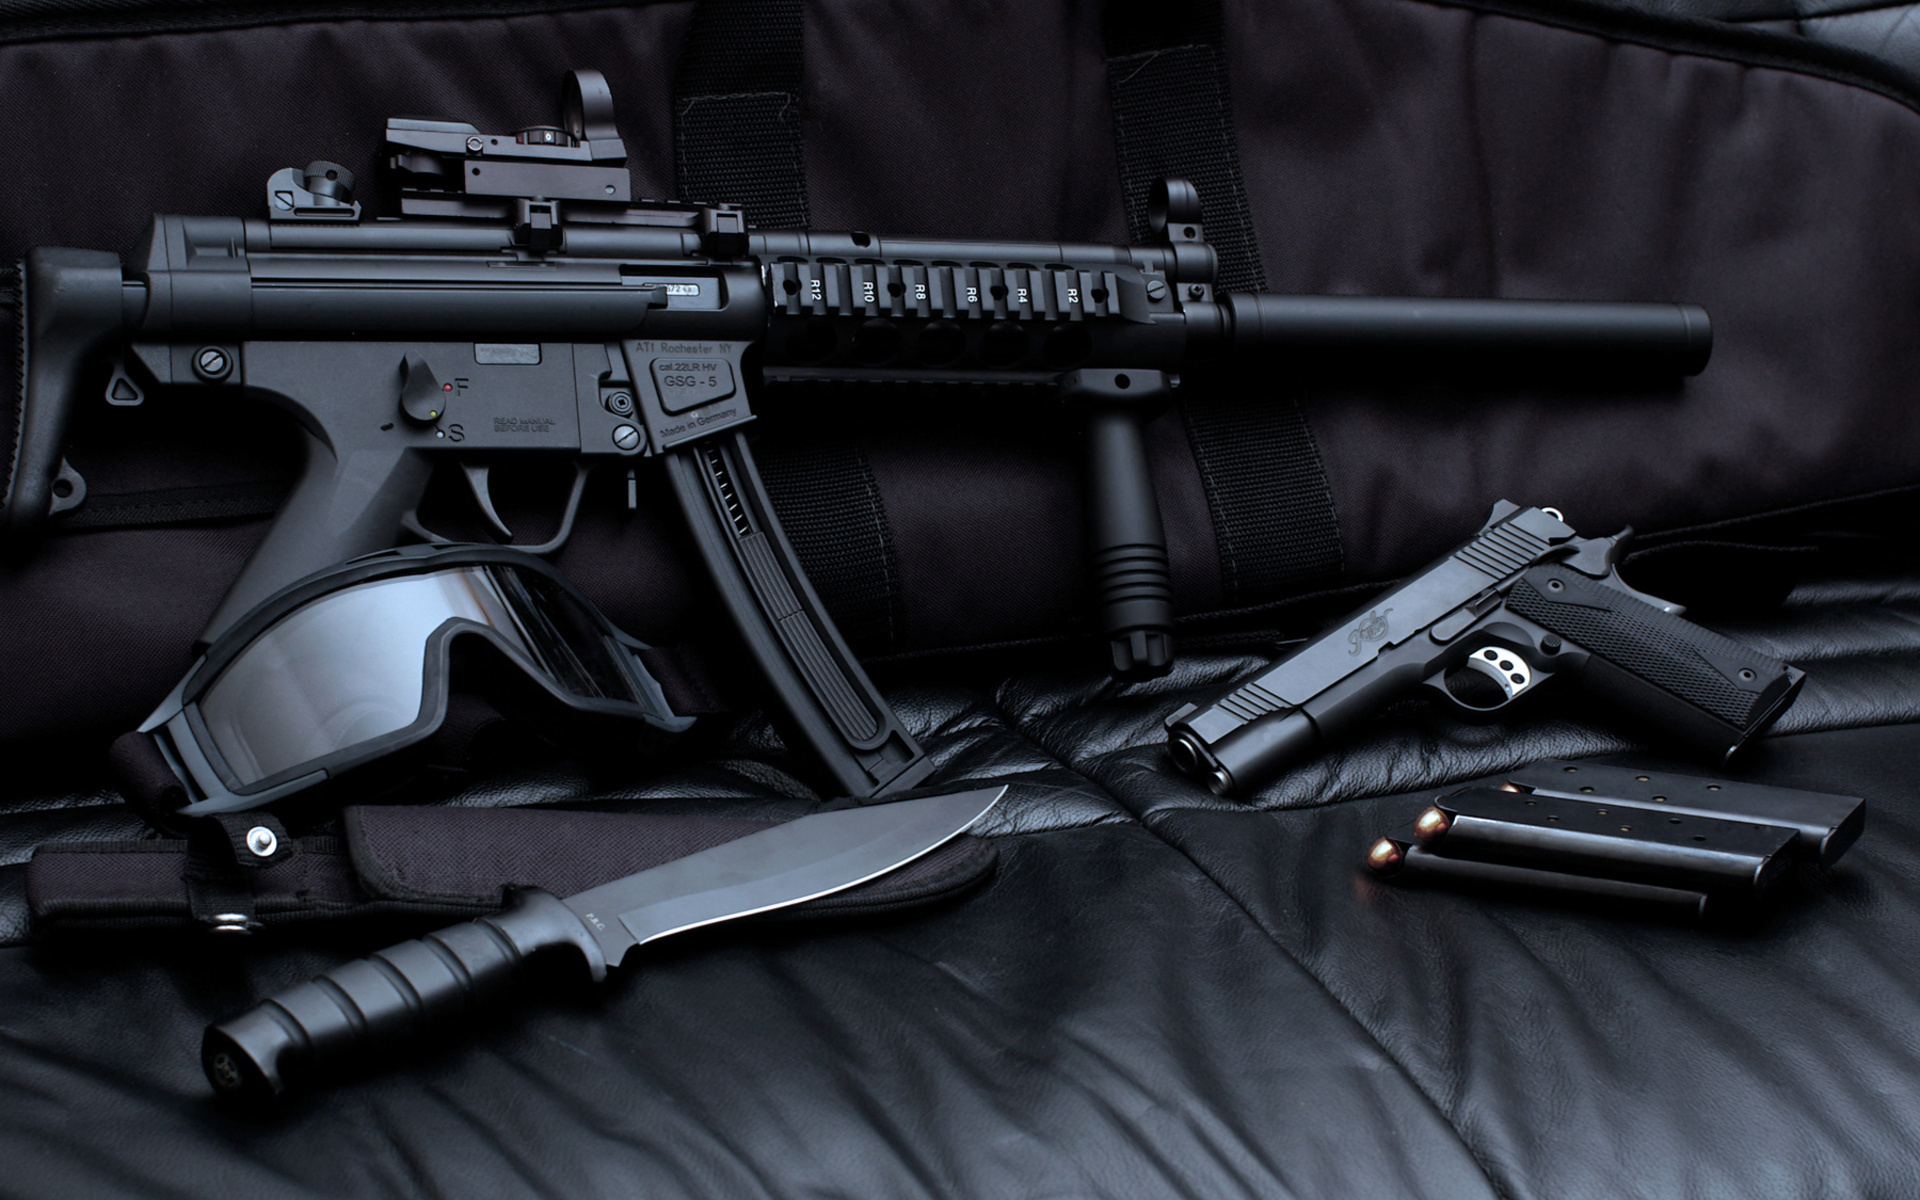 Submachine Gun Full HD Wallpaper and Background Image ...